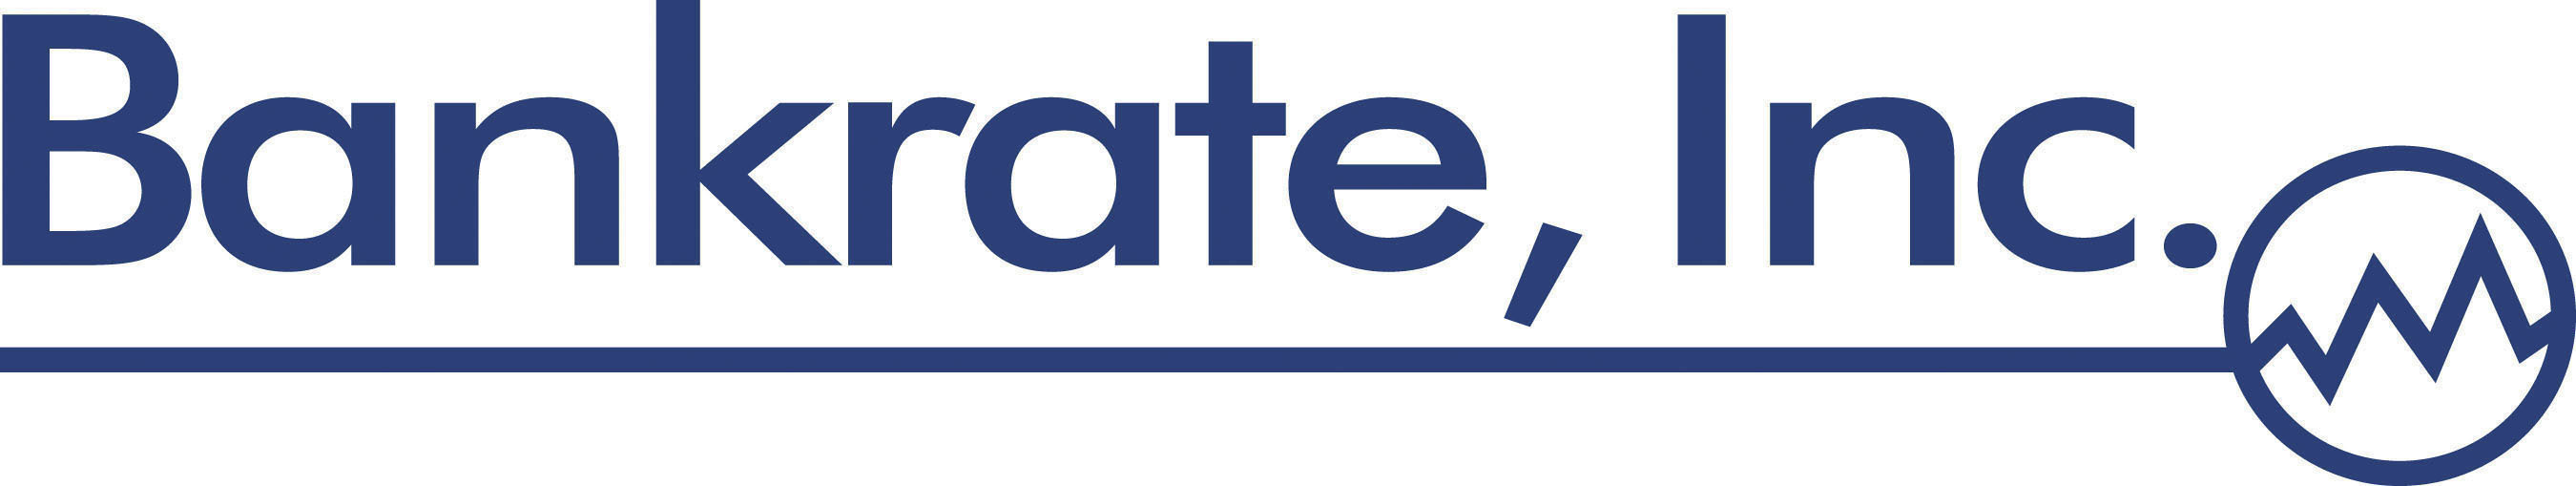 Bankrate, Inc. logo. (PRNewsFoto/Bankrate, Inc.)